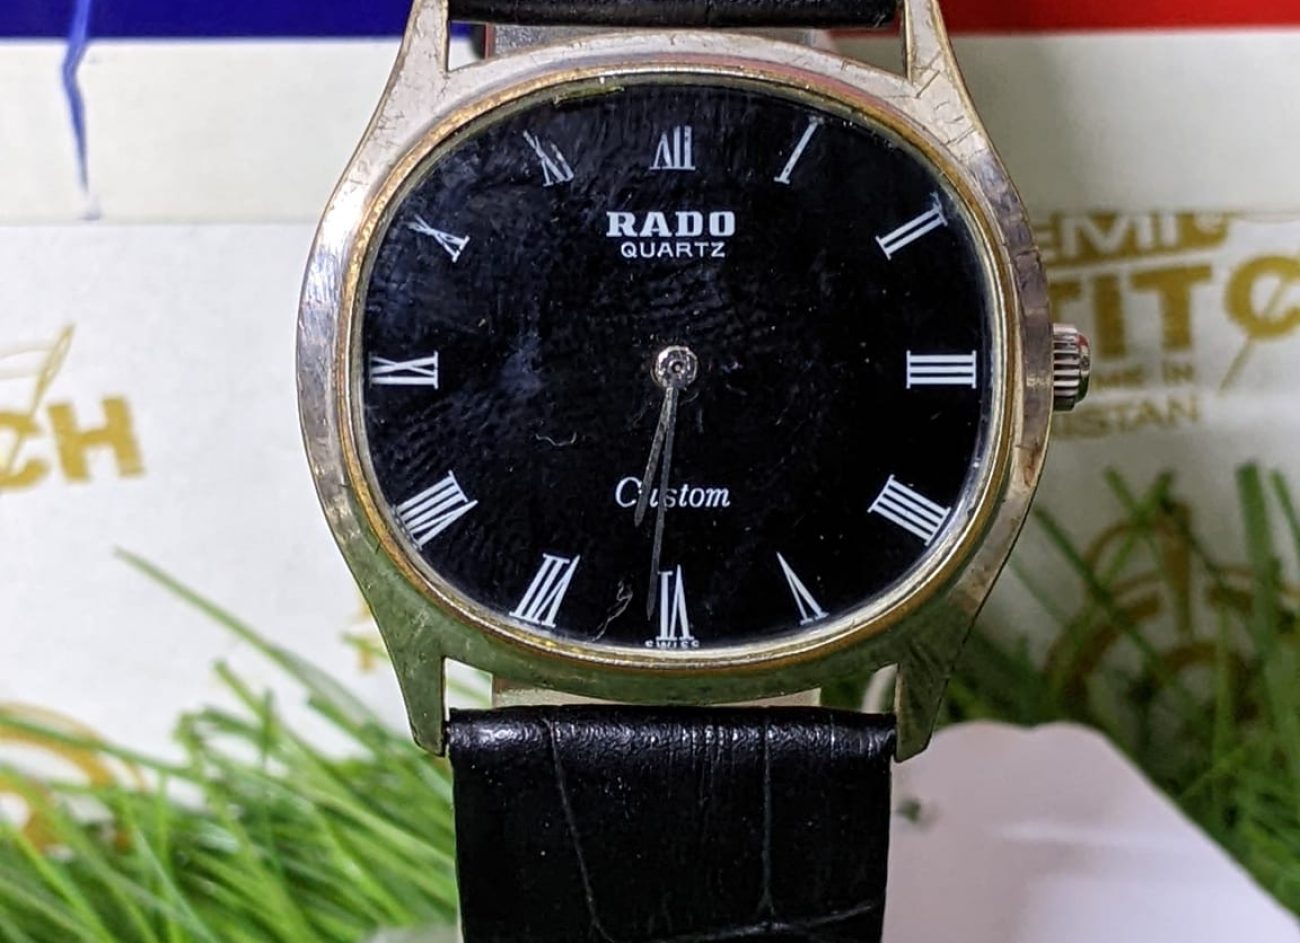 Rado Custom made in Switzerland